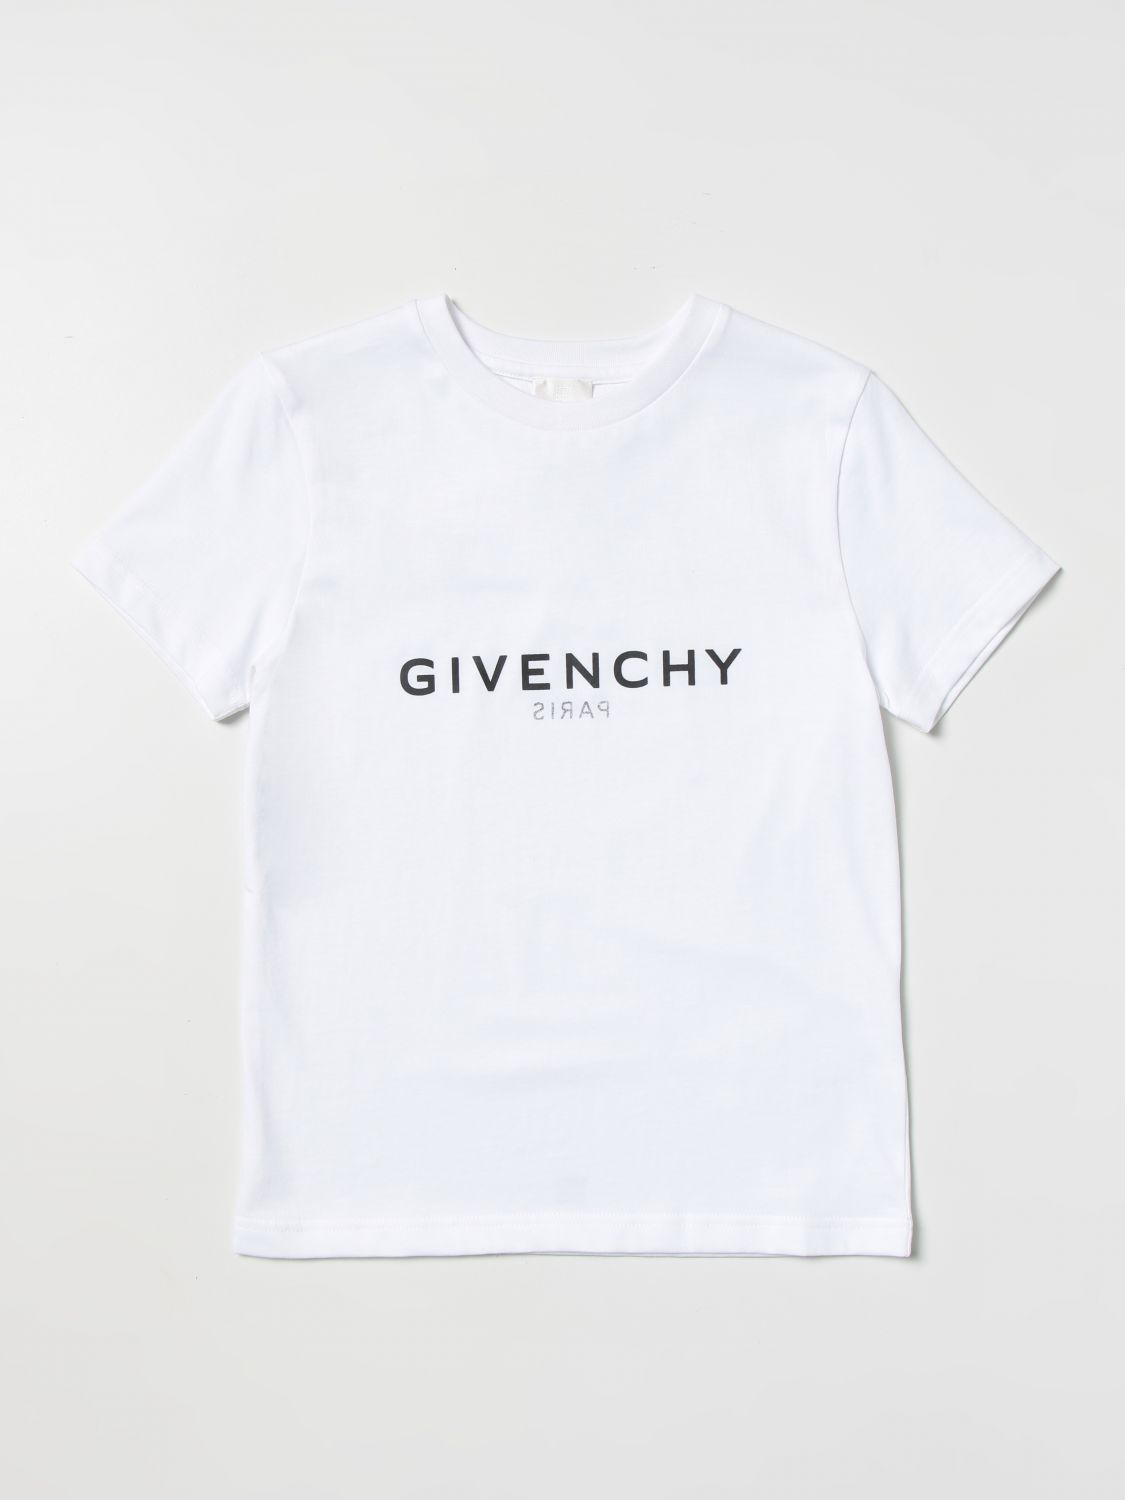 Vertrappen Geld lenende Onverenigbaar GIVENCHY: t-shirt for boys - White | Givenchy t-shirt H25404 online on  GIGLIO.COM